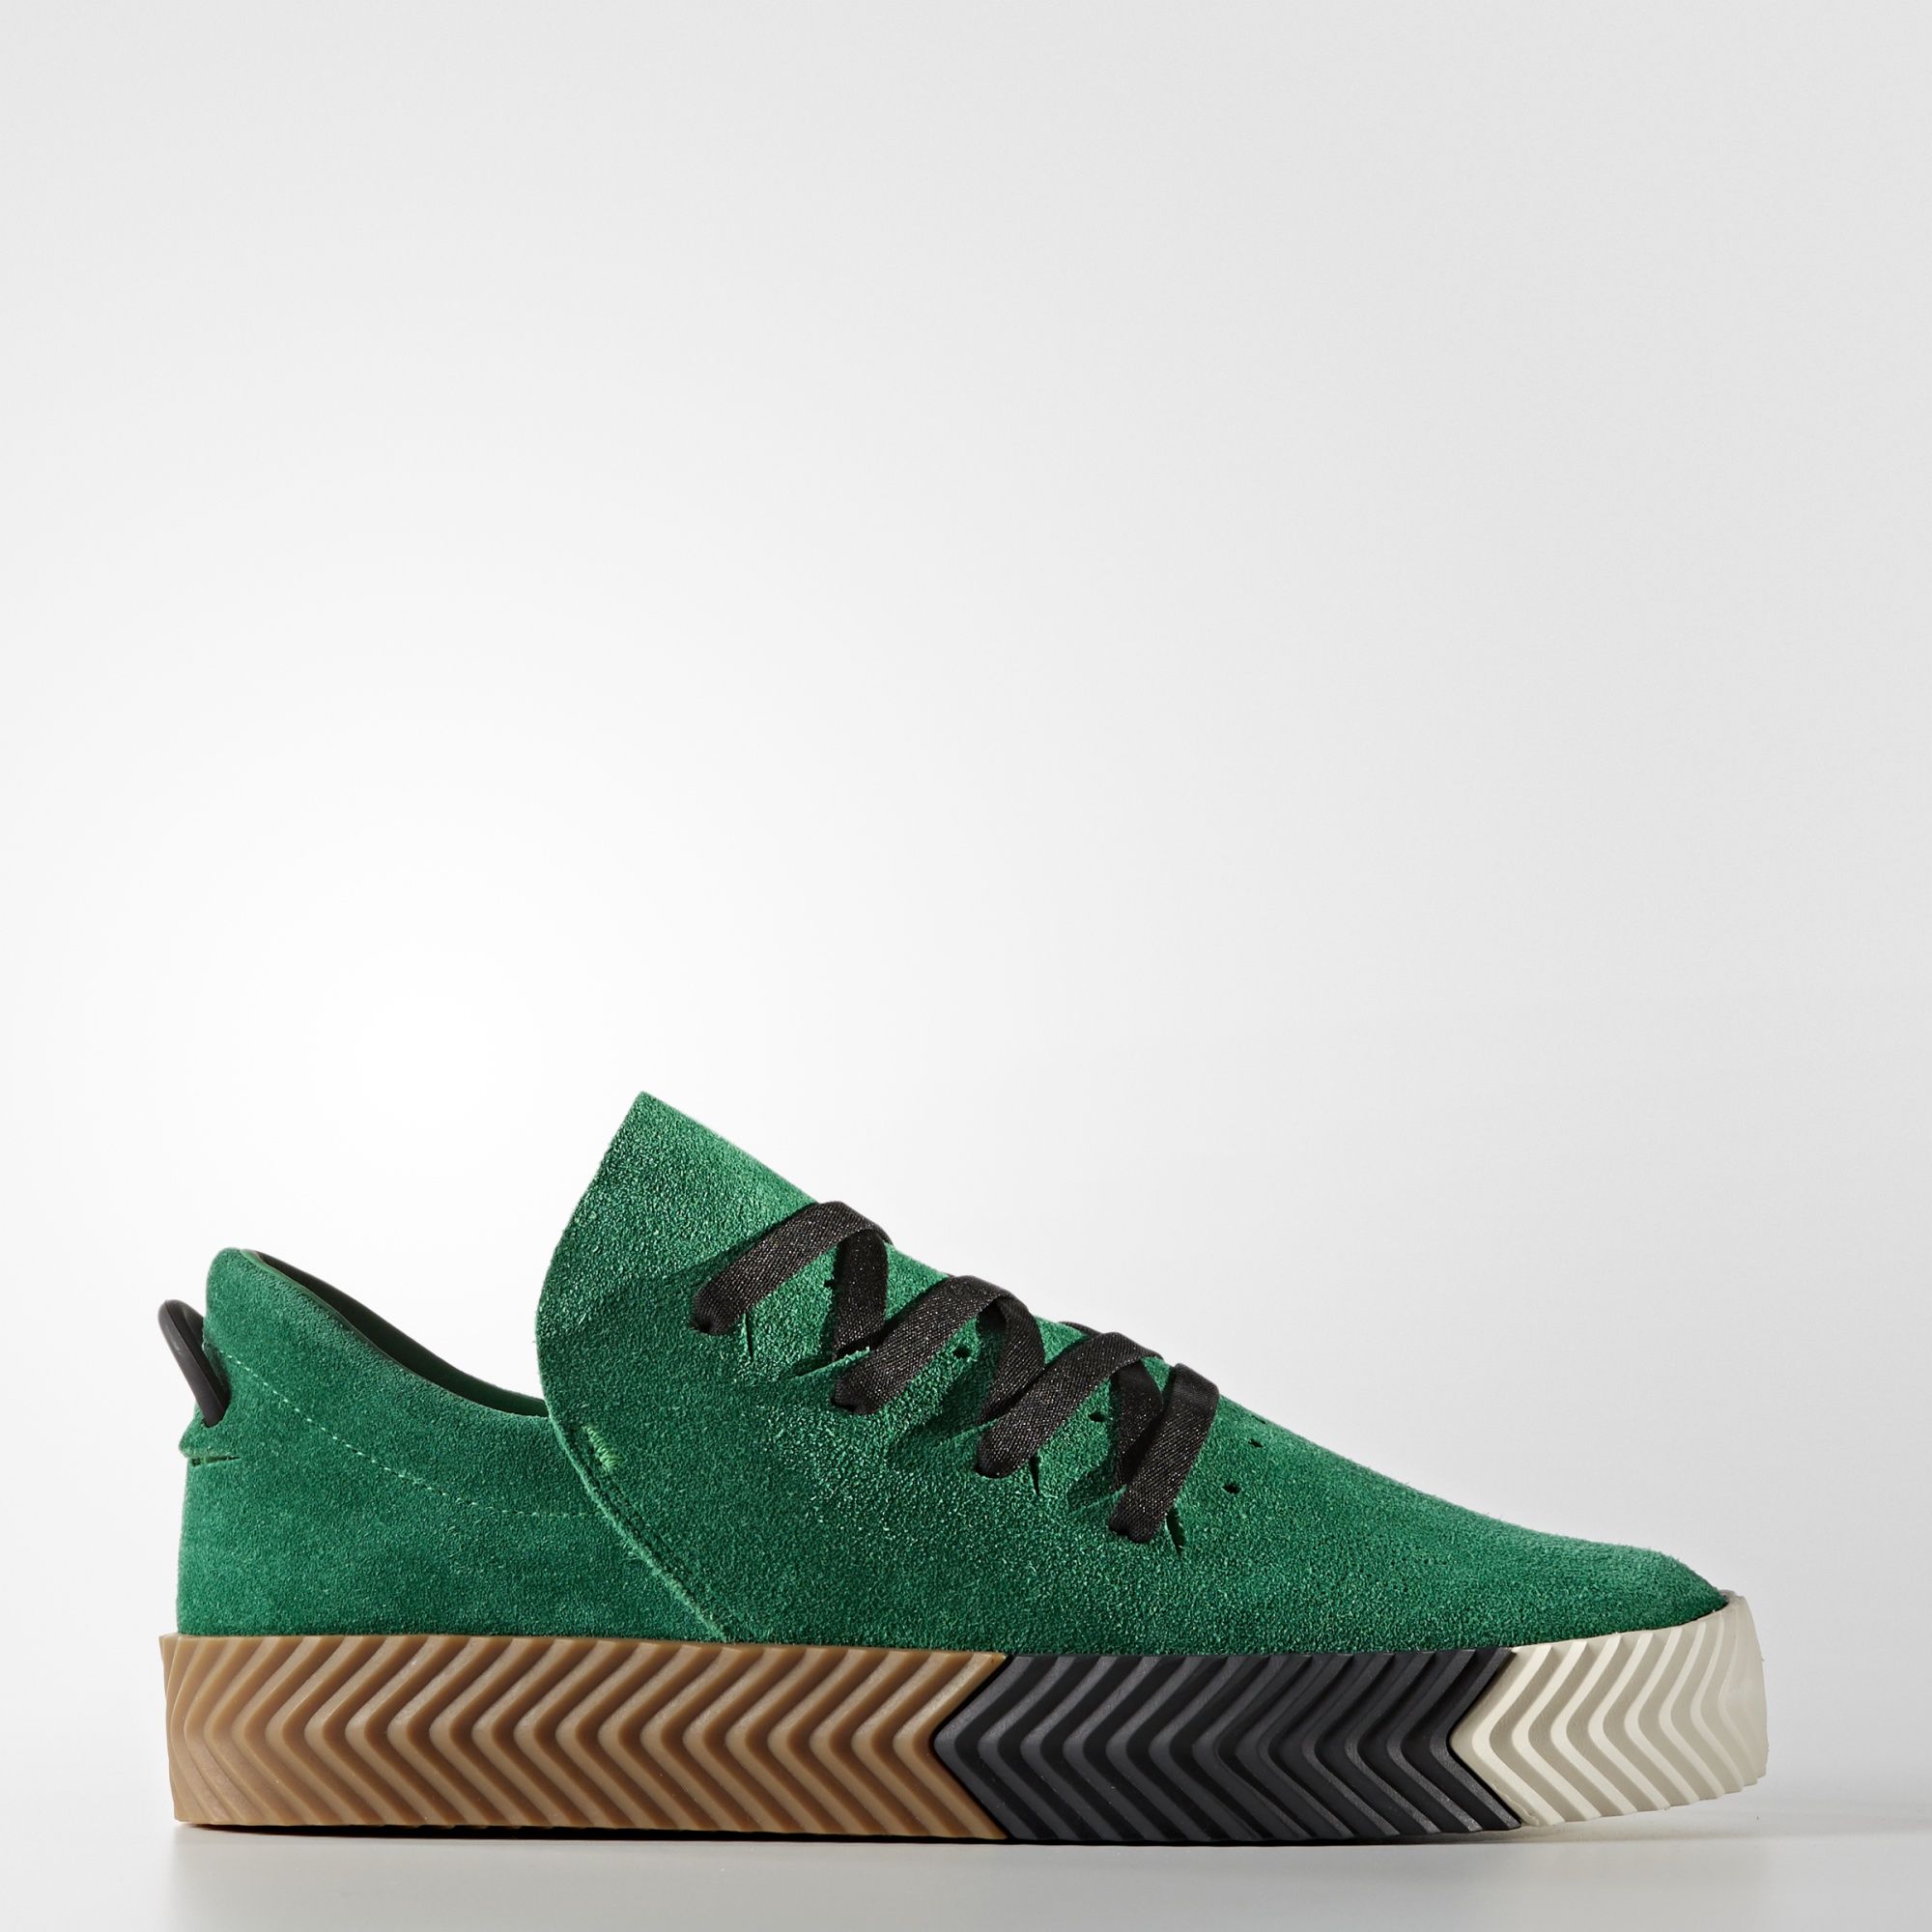 adidas-aw-skate-alexander-wang-green-2